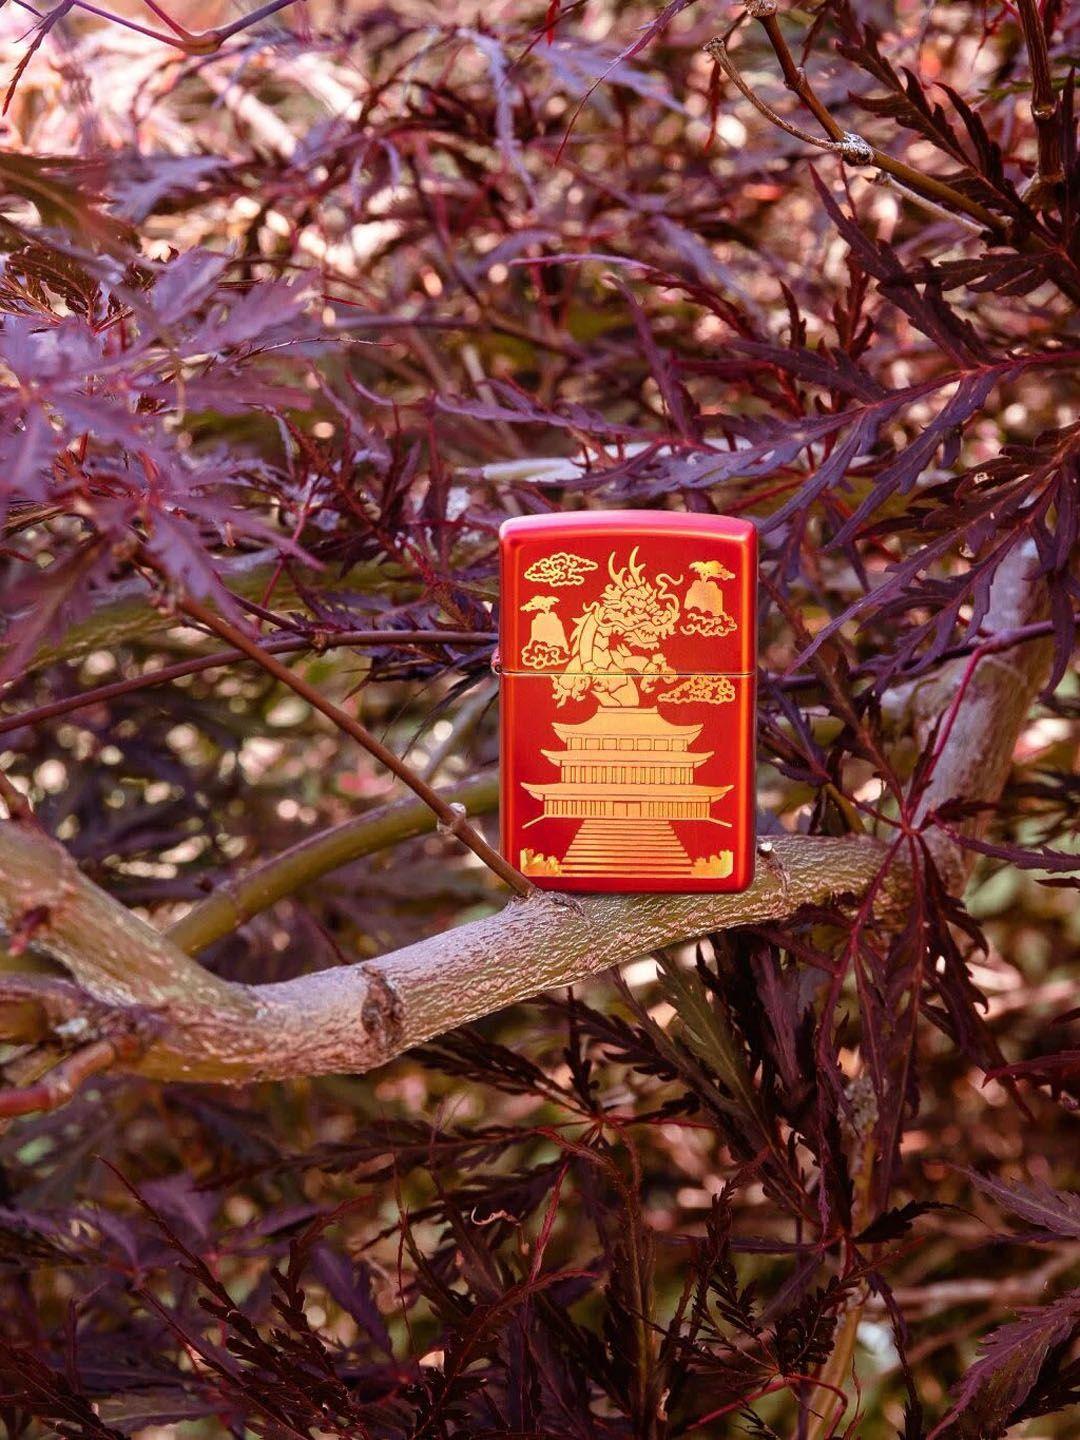 zippo red & gold-toned printed eastern design pocket lighter